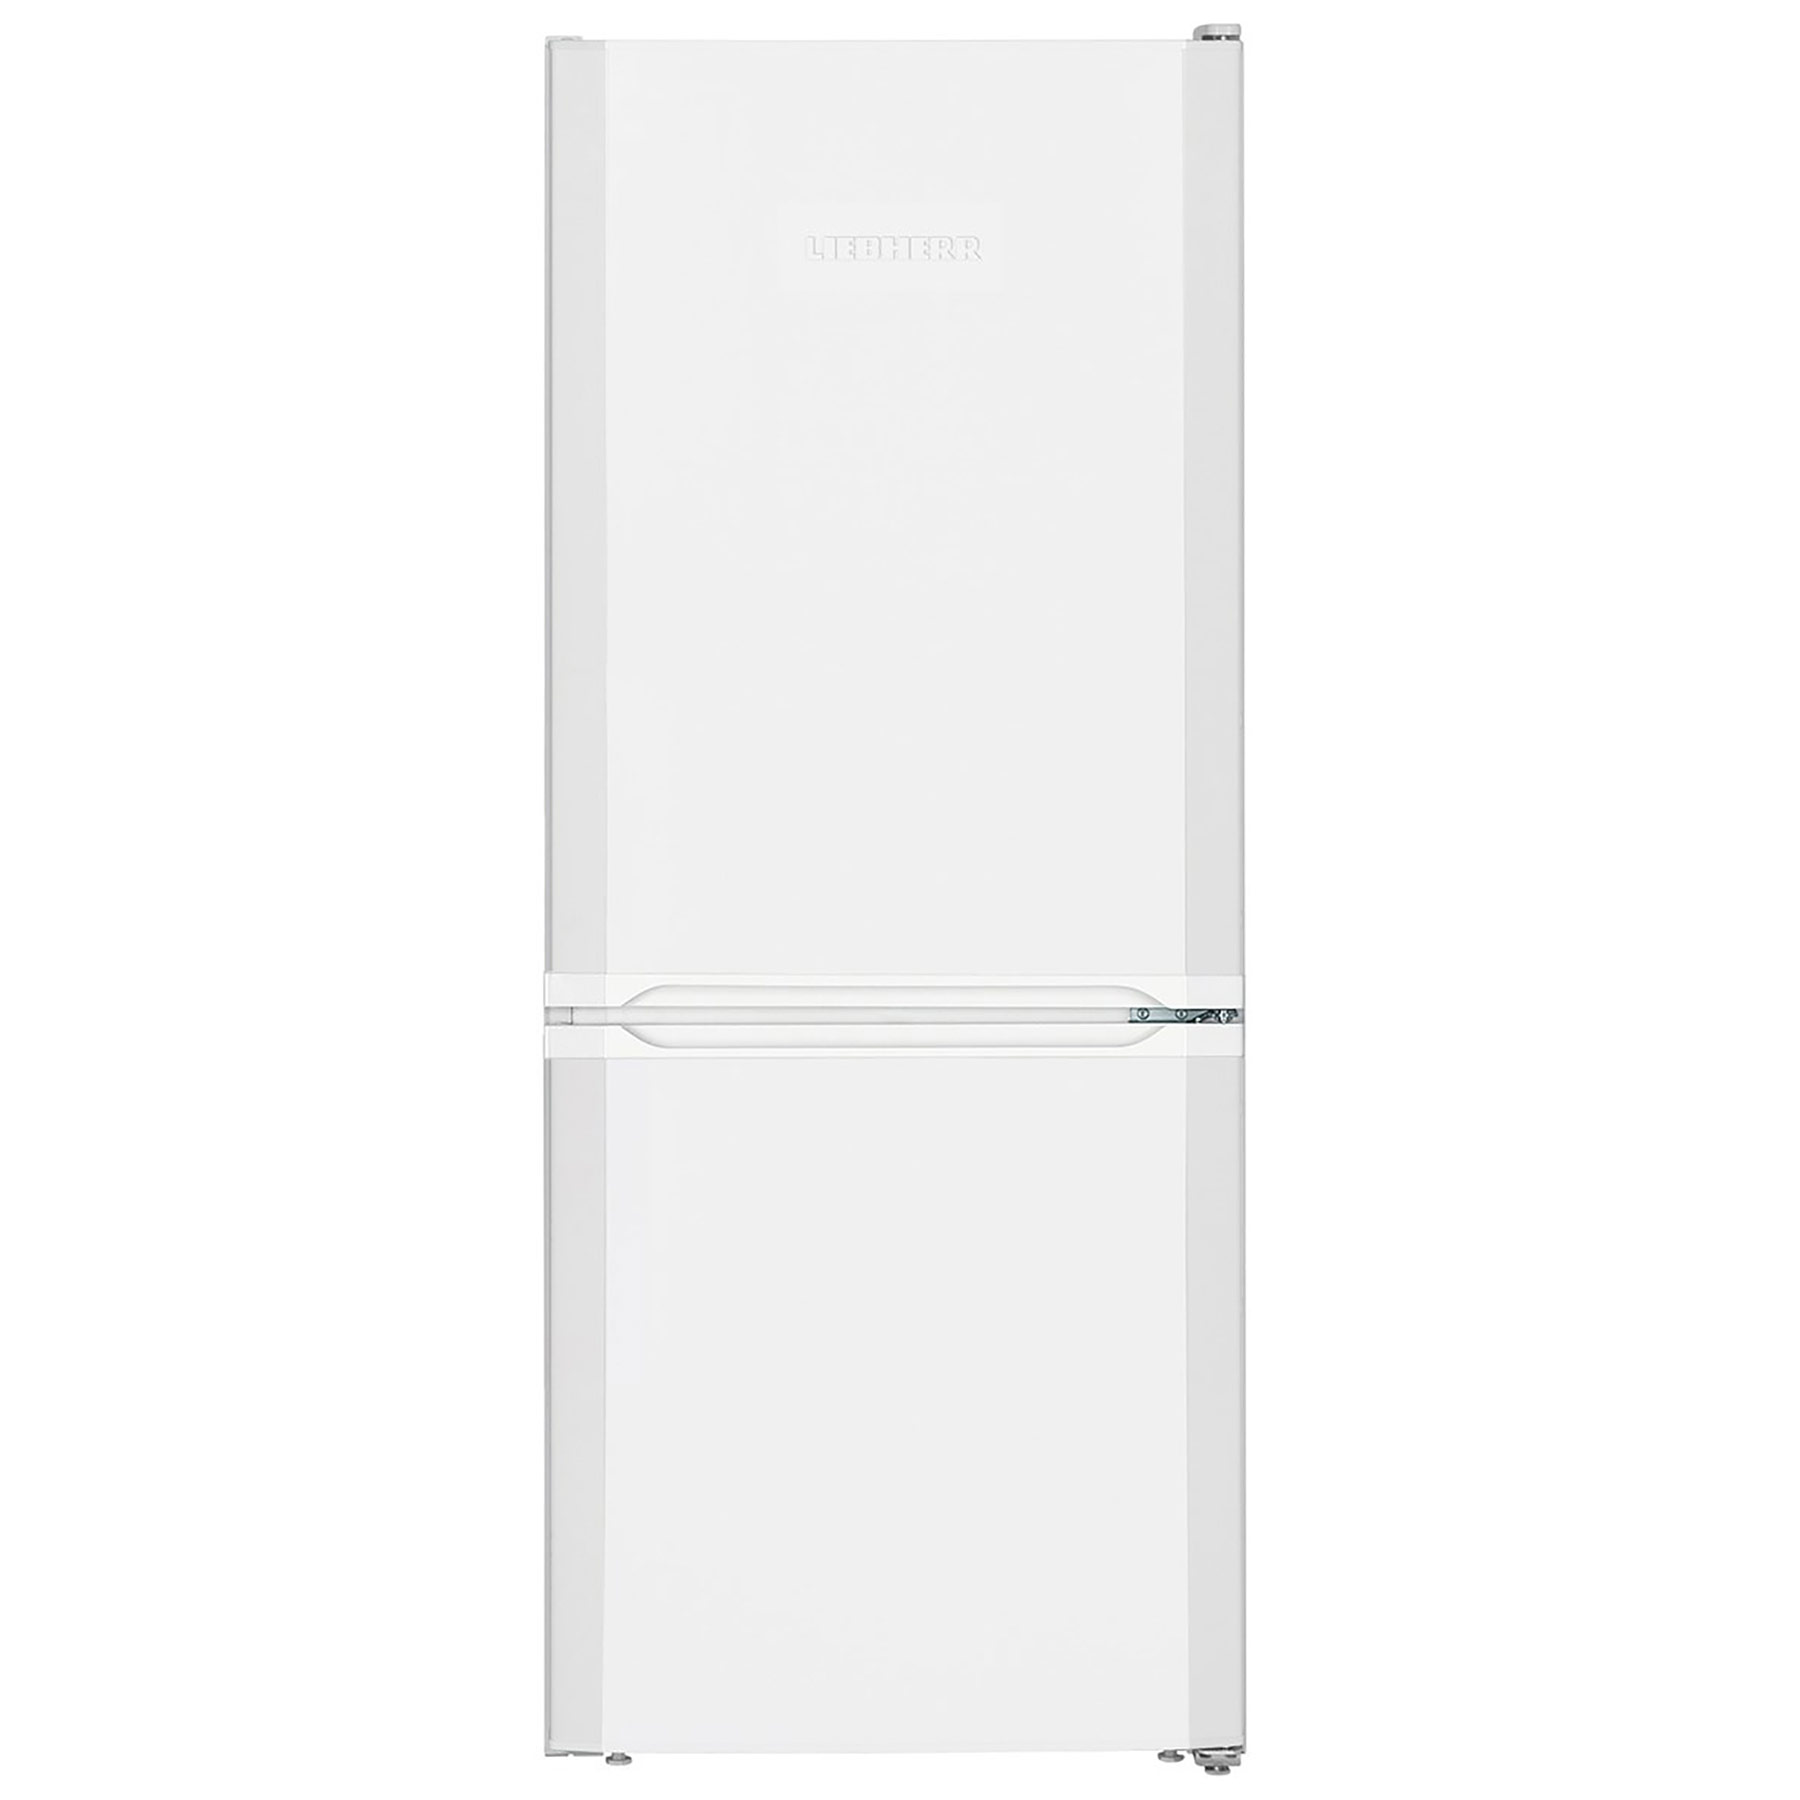 Liebherr CUE2331 55cm SmartFrost Fridge Freezer in White 1 37m E Rated